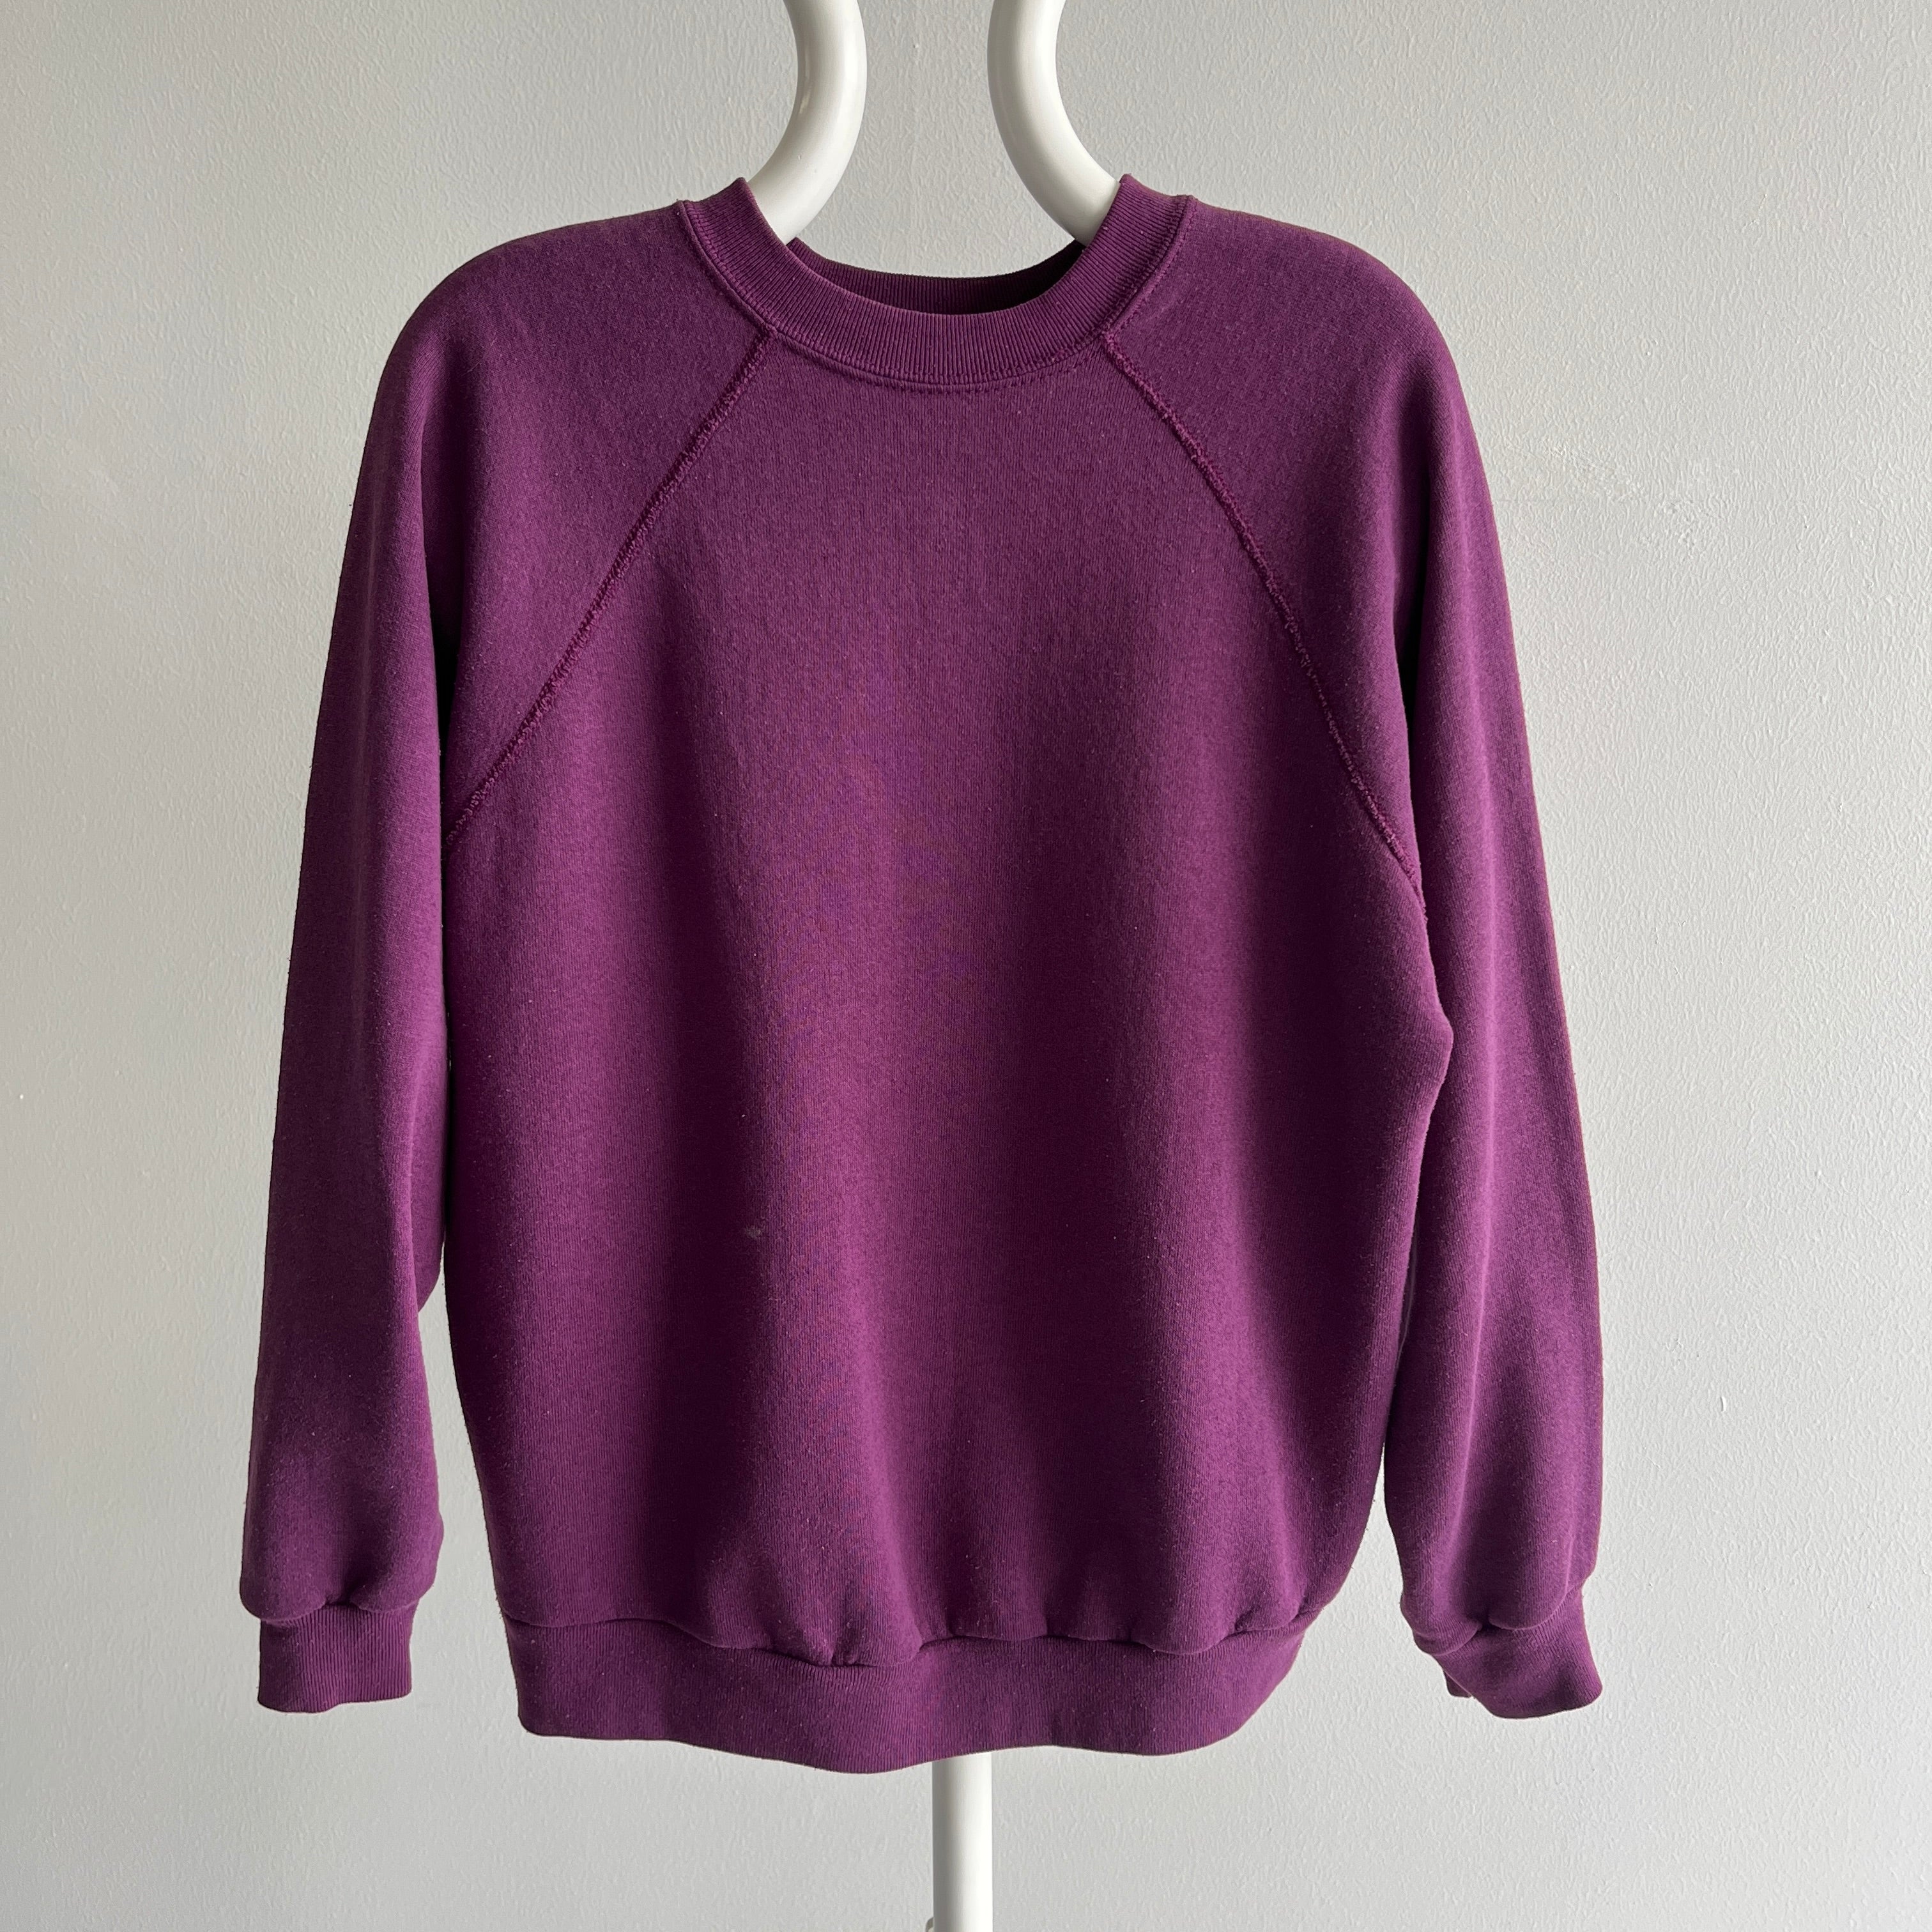 1980s Eggplant Purple Raglan Sweatshirt by Tultex